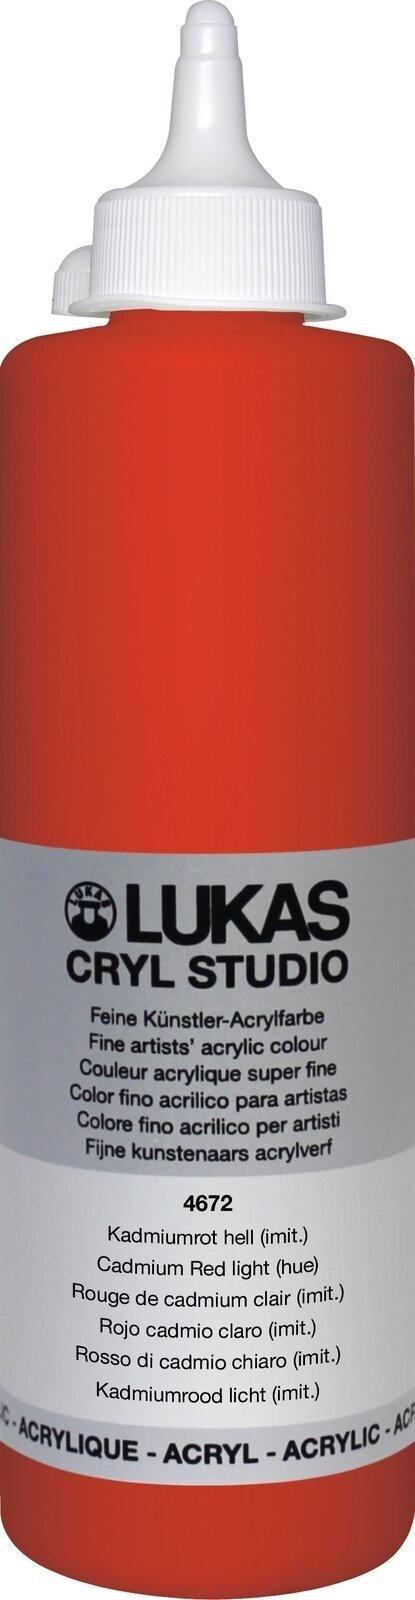 Pintura acrílica Lukas Cryl Studio Acrylic Paint 500 ml Cadmium Red Light Hue Pintura acrílica